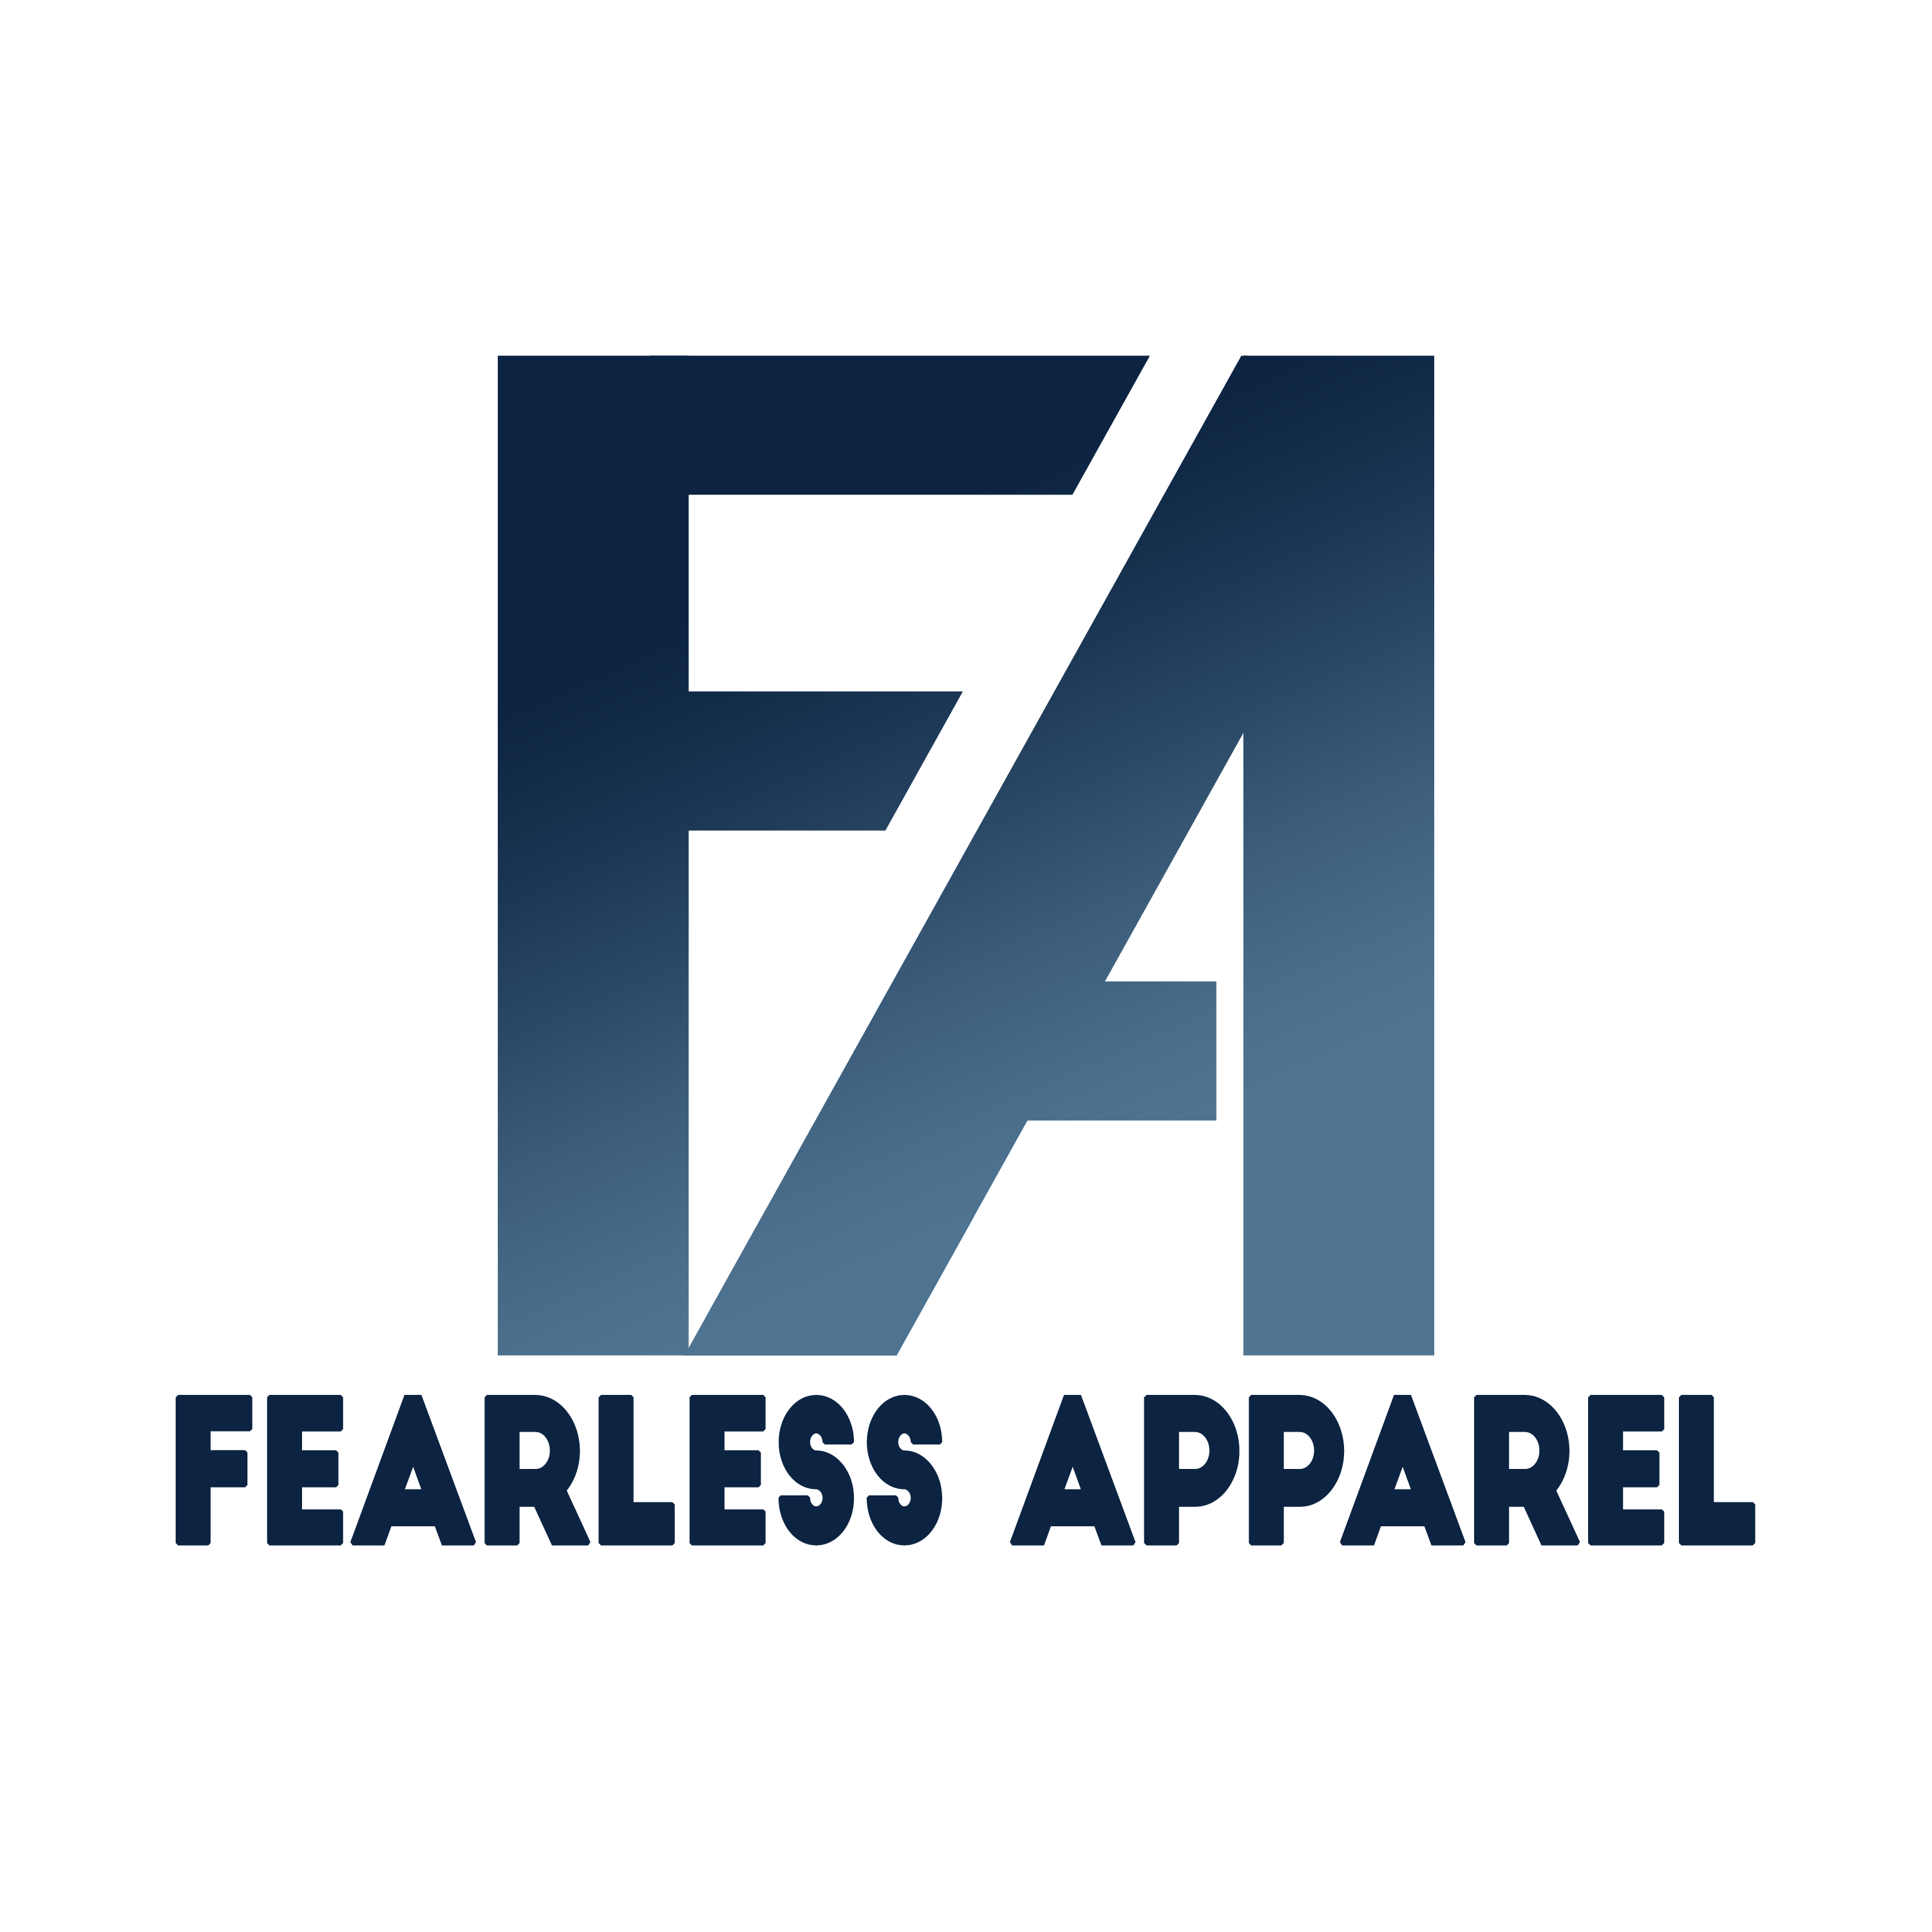 Fearlessapparel – Clothing Fashion